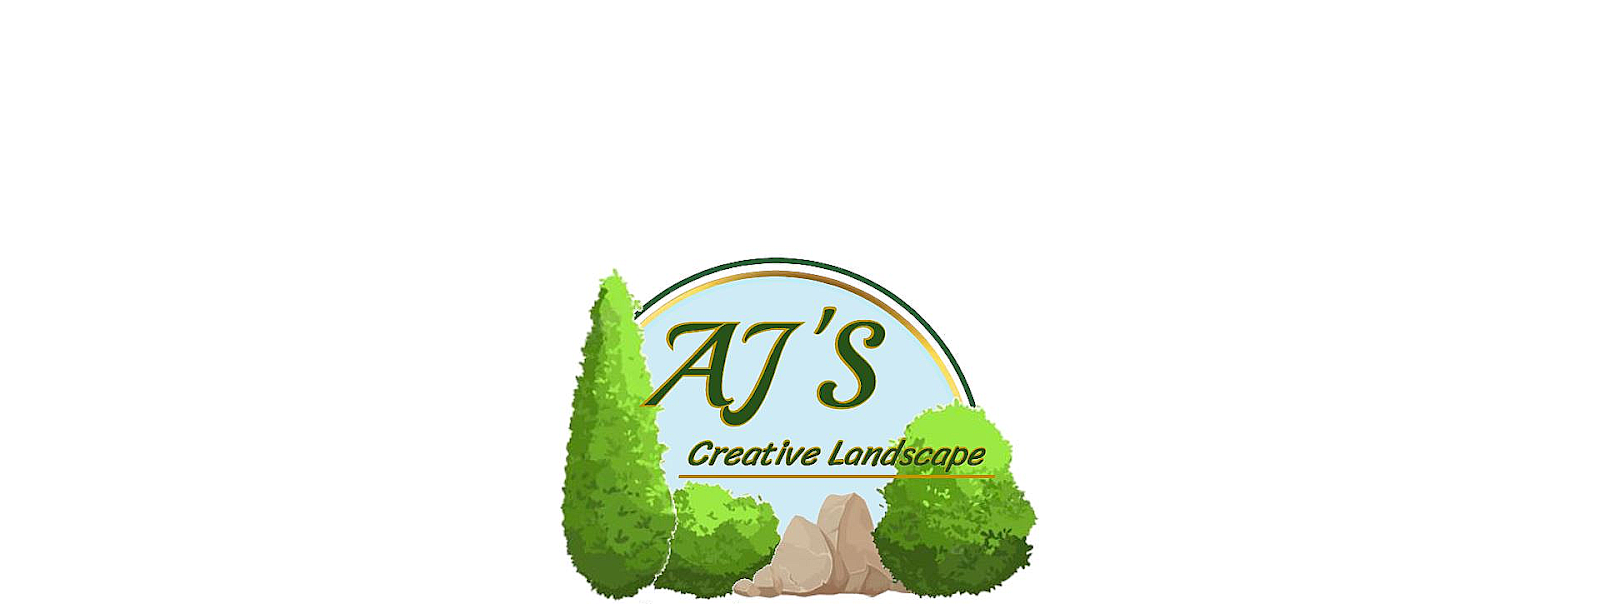 AJ's Creative Landscape Logo